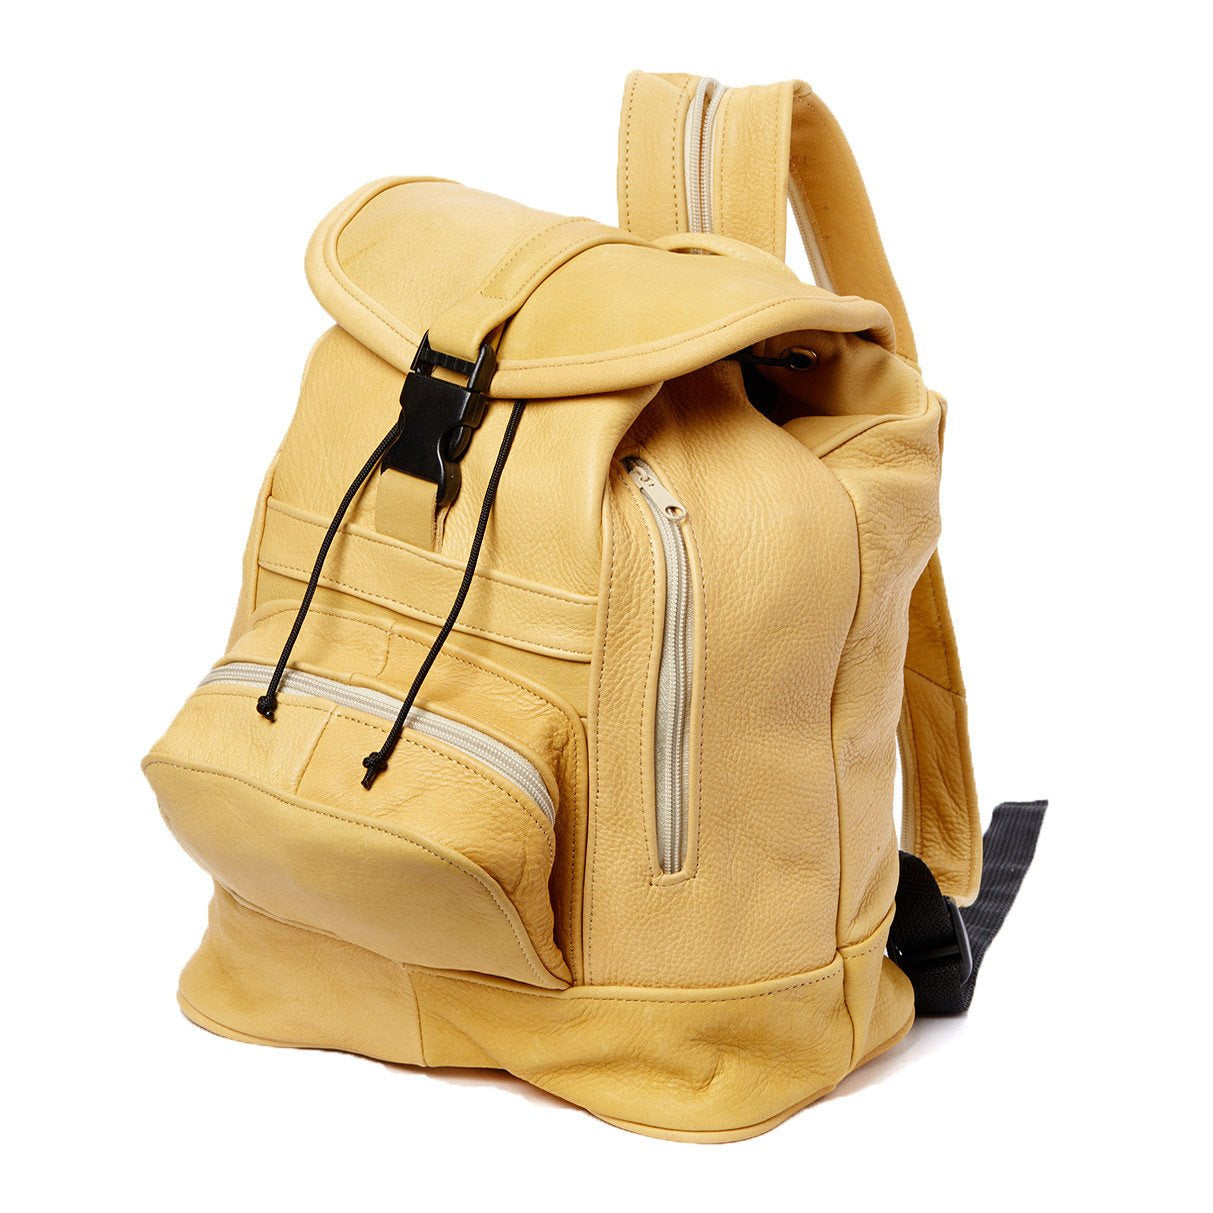 Lifetime Leather Backpack - WholesaleLeatherSupplier.com
 - 5